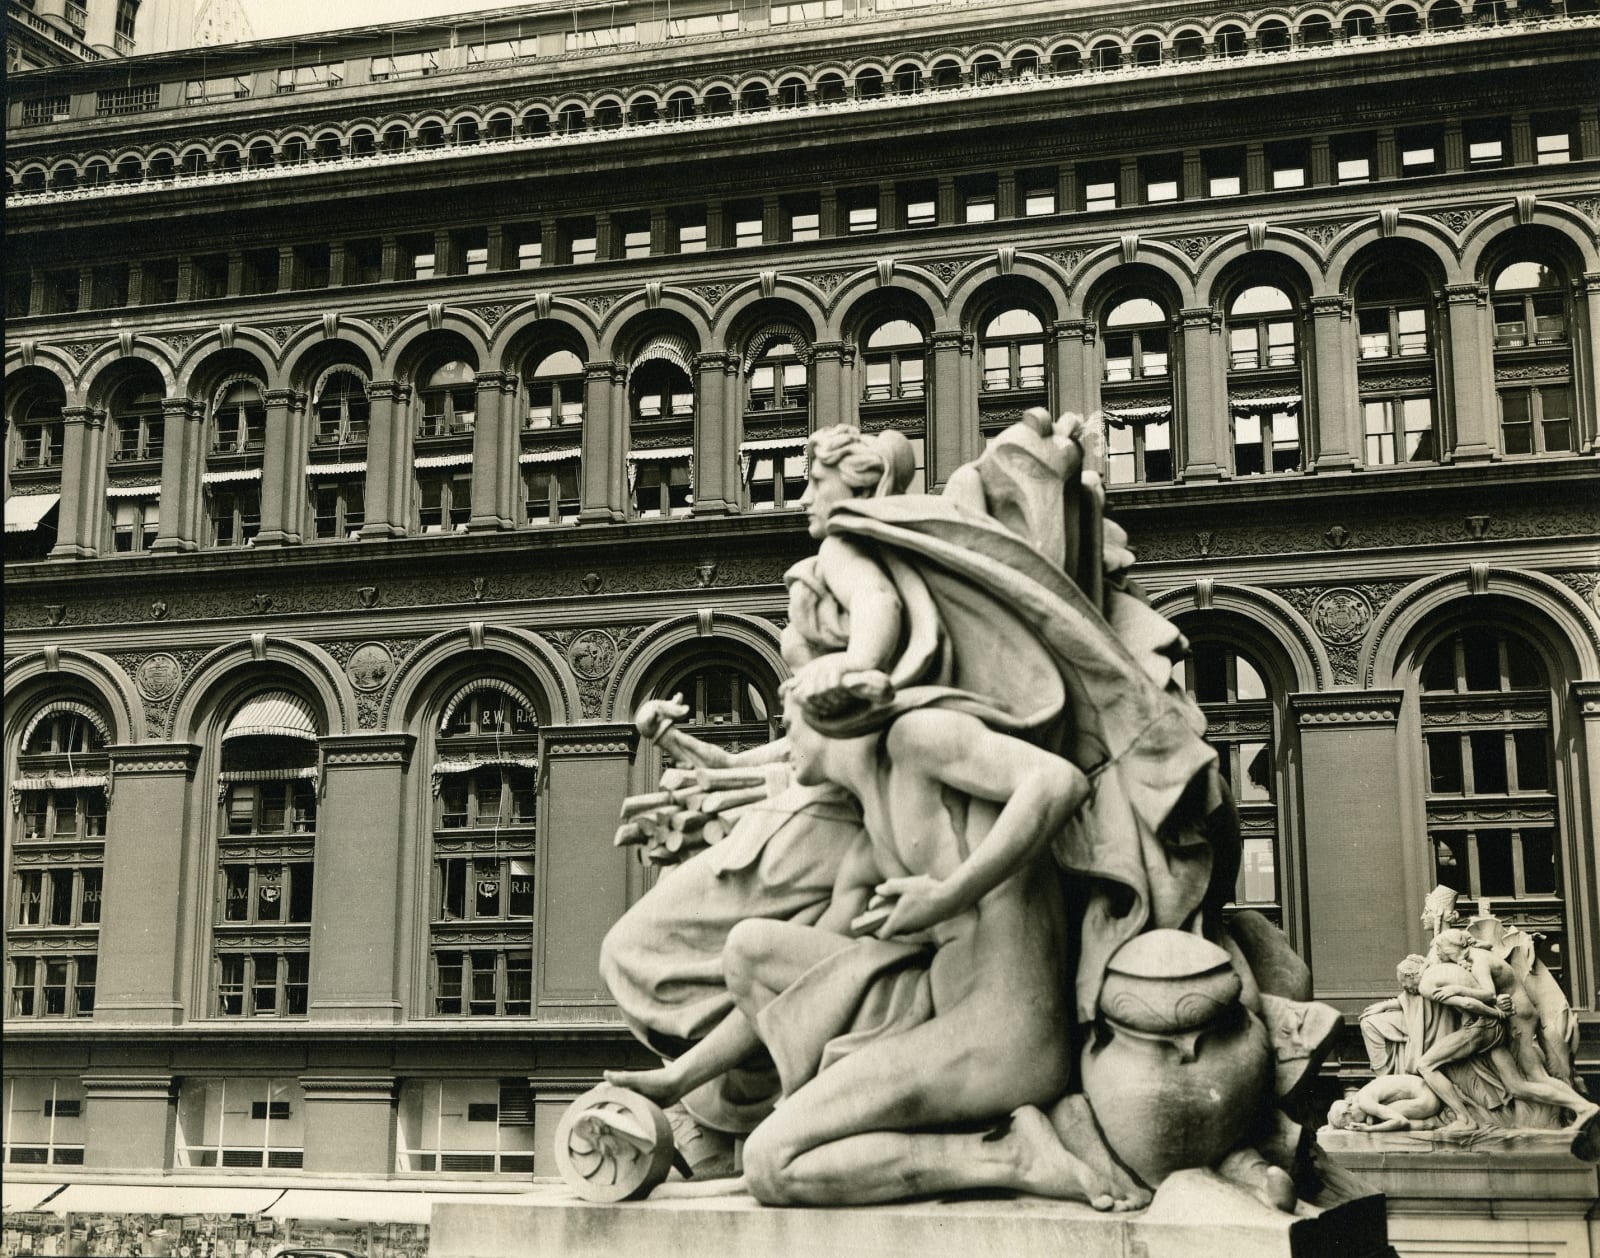 Berenice Abbott, Customs House Statues and New York Produce Exchange (Wall Street), New York City, 1936